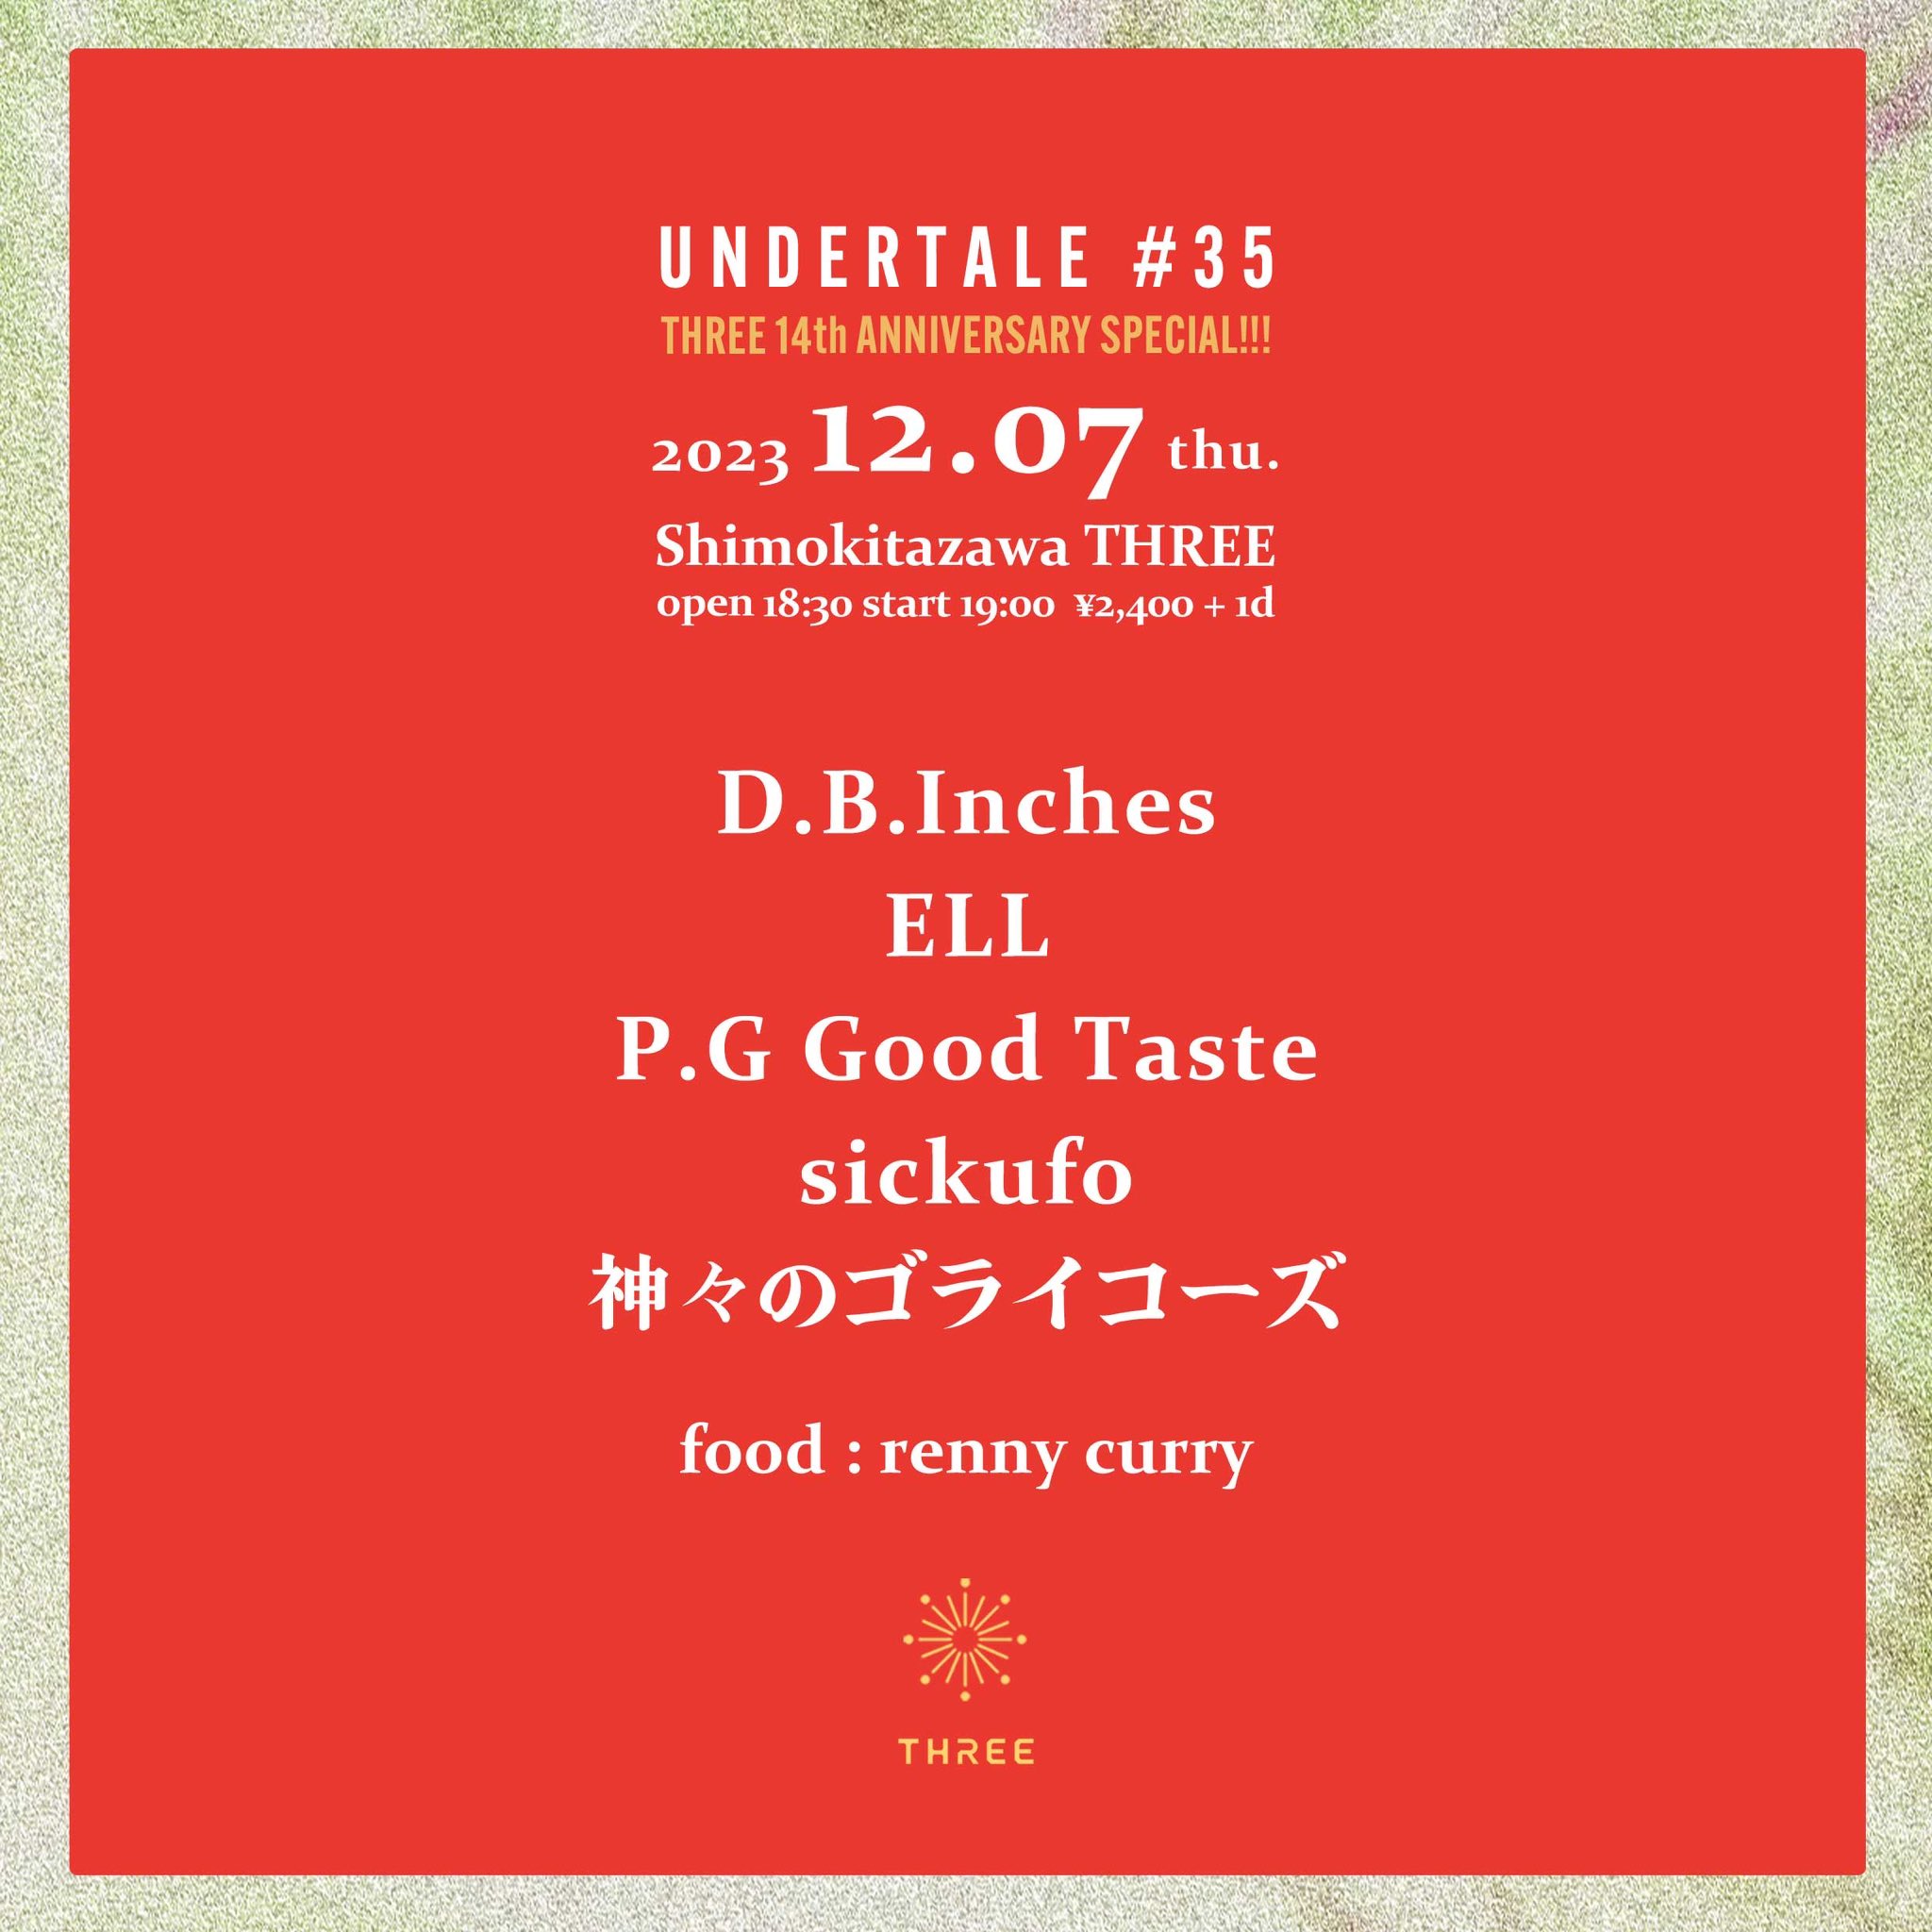 【live】UNDERTALE #35